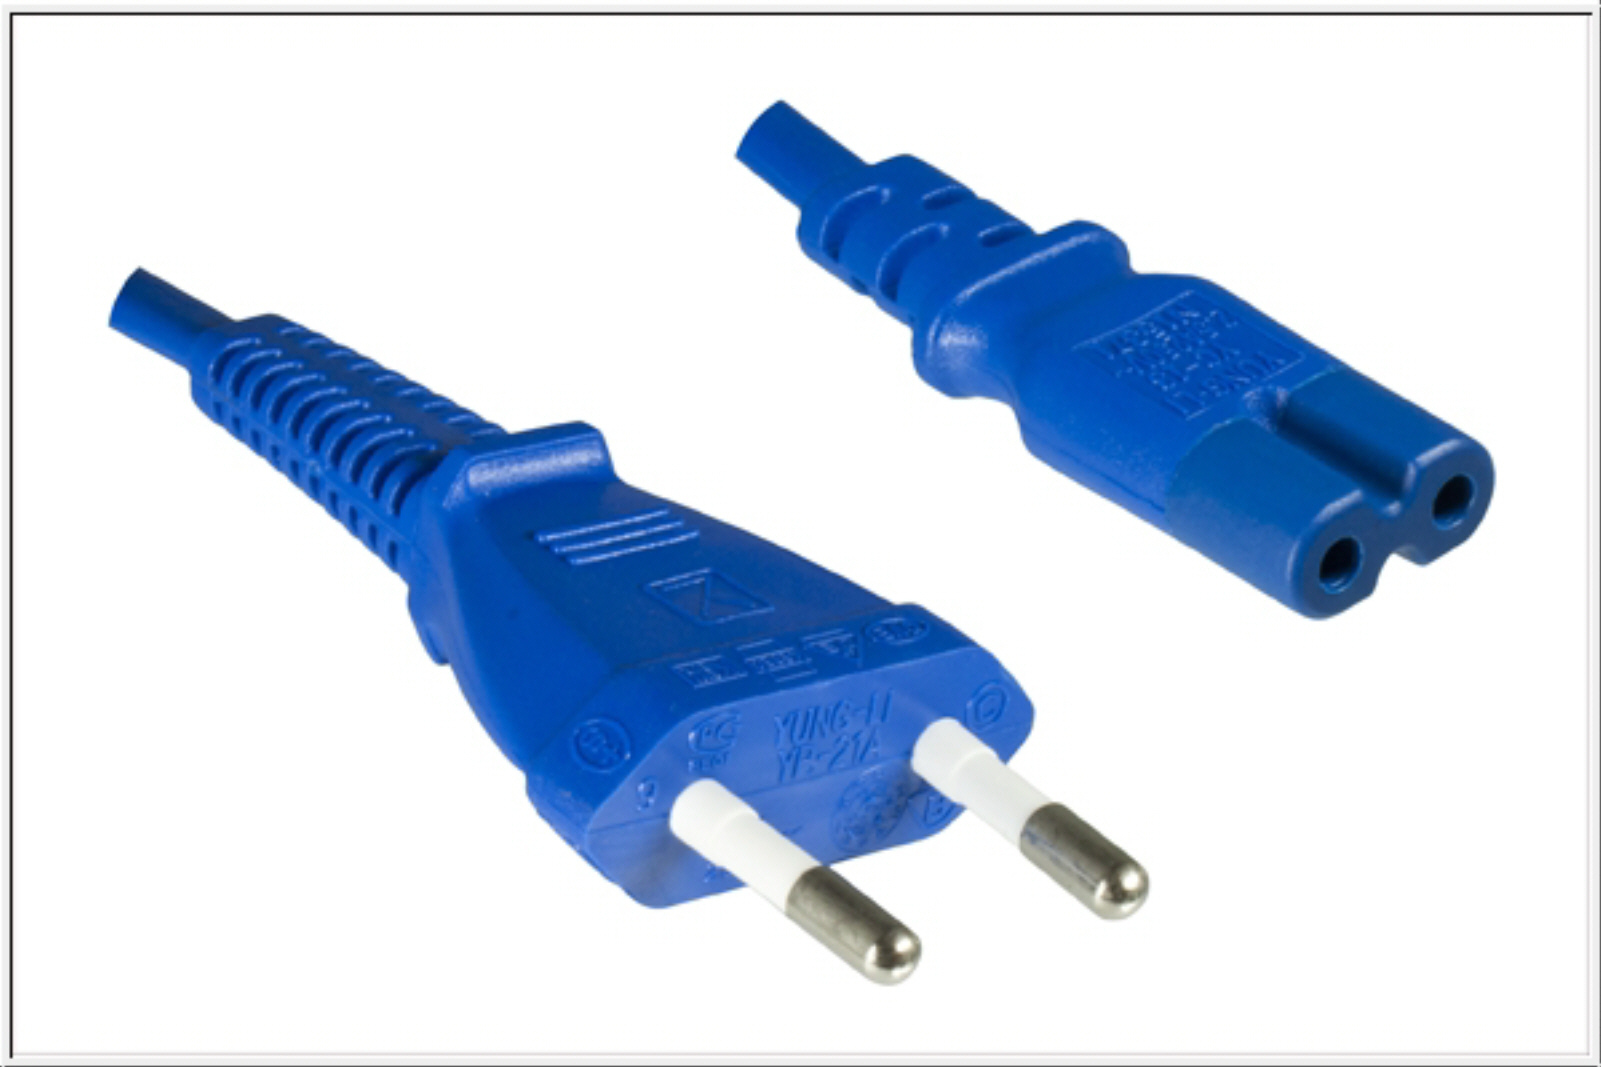 Netzkabel Eurostecker/IEC 60320-C7, blau 180cm, CE